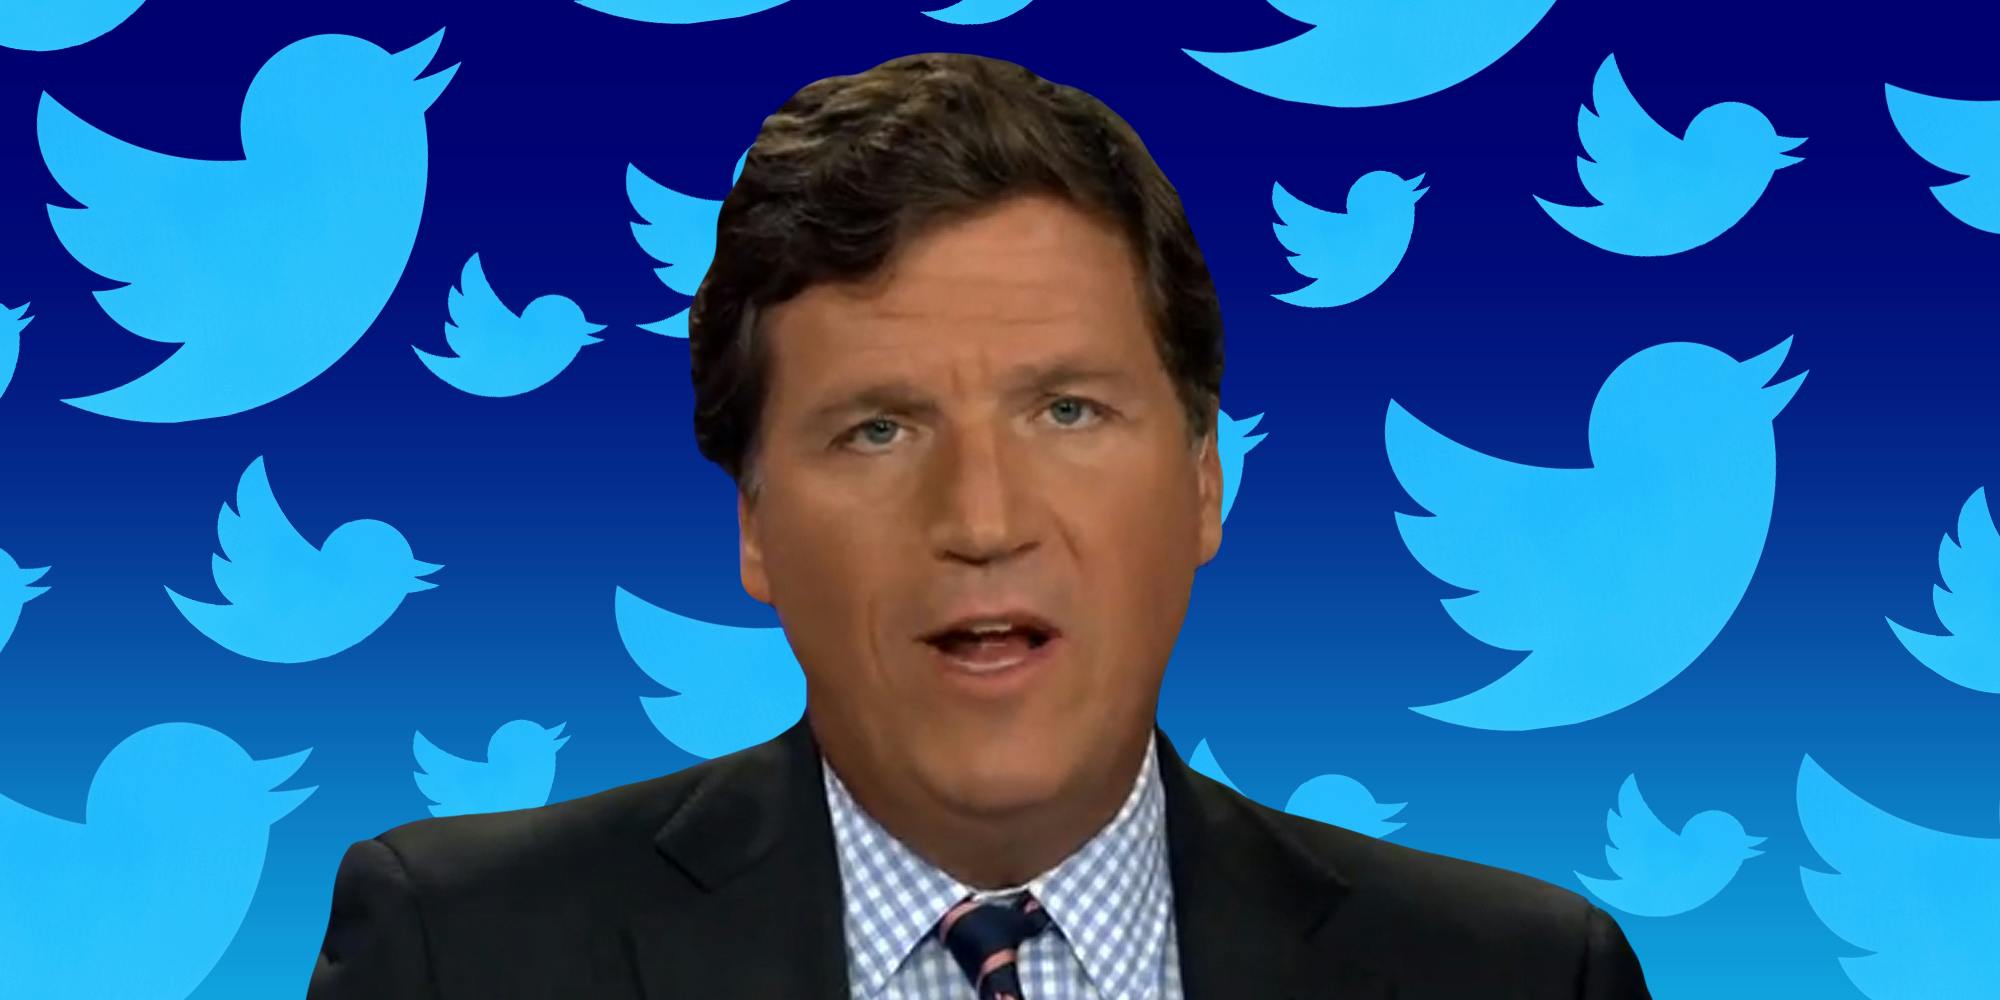 Tucker Carlson speaking in front of dark to light blue gradient background with Twitter bird logos random pattern